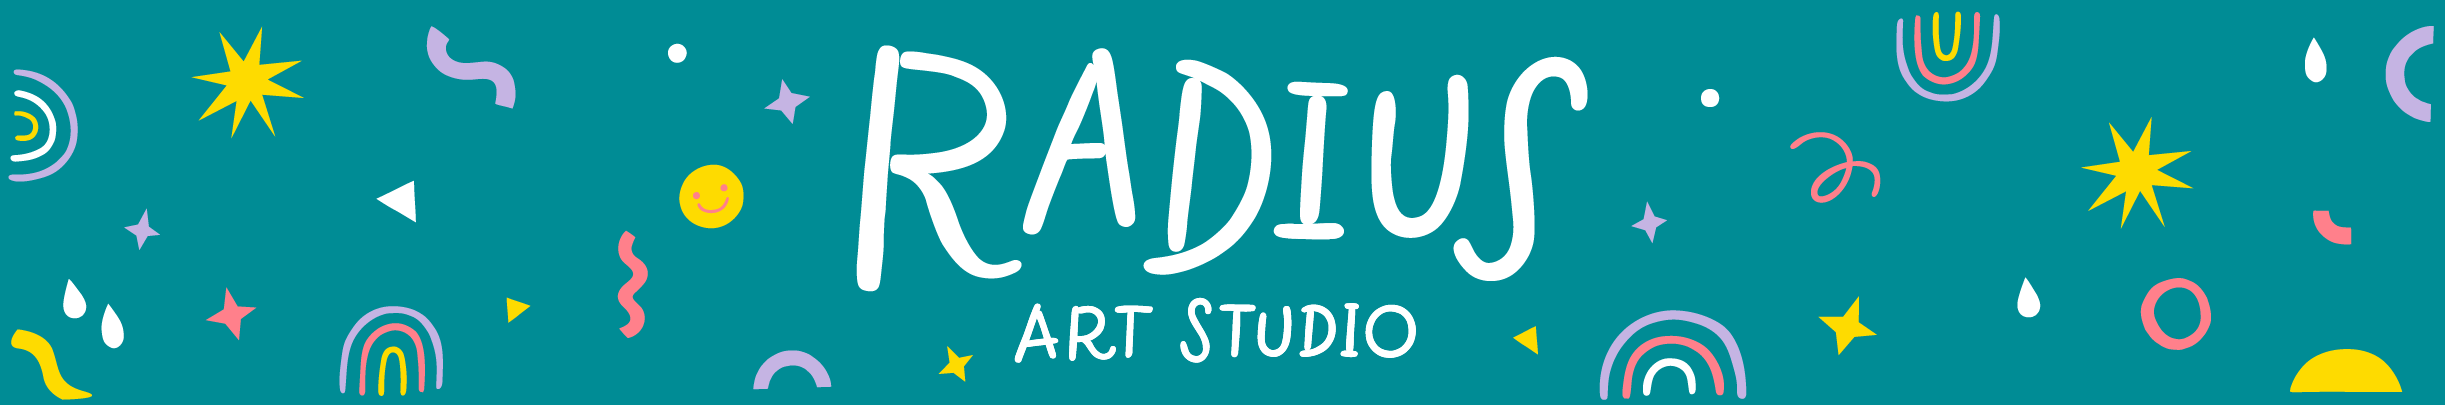 Radius Art Studio